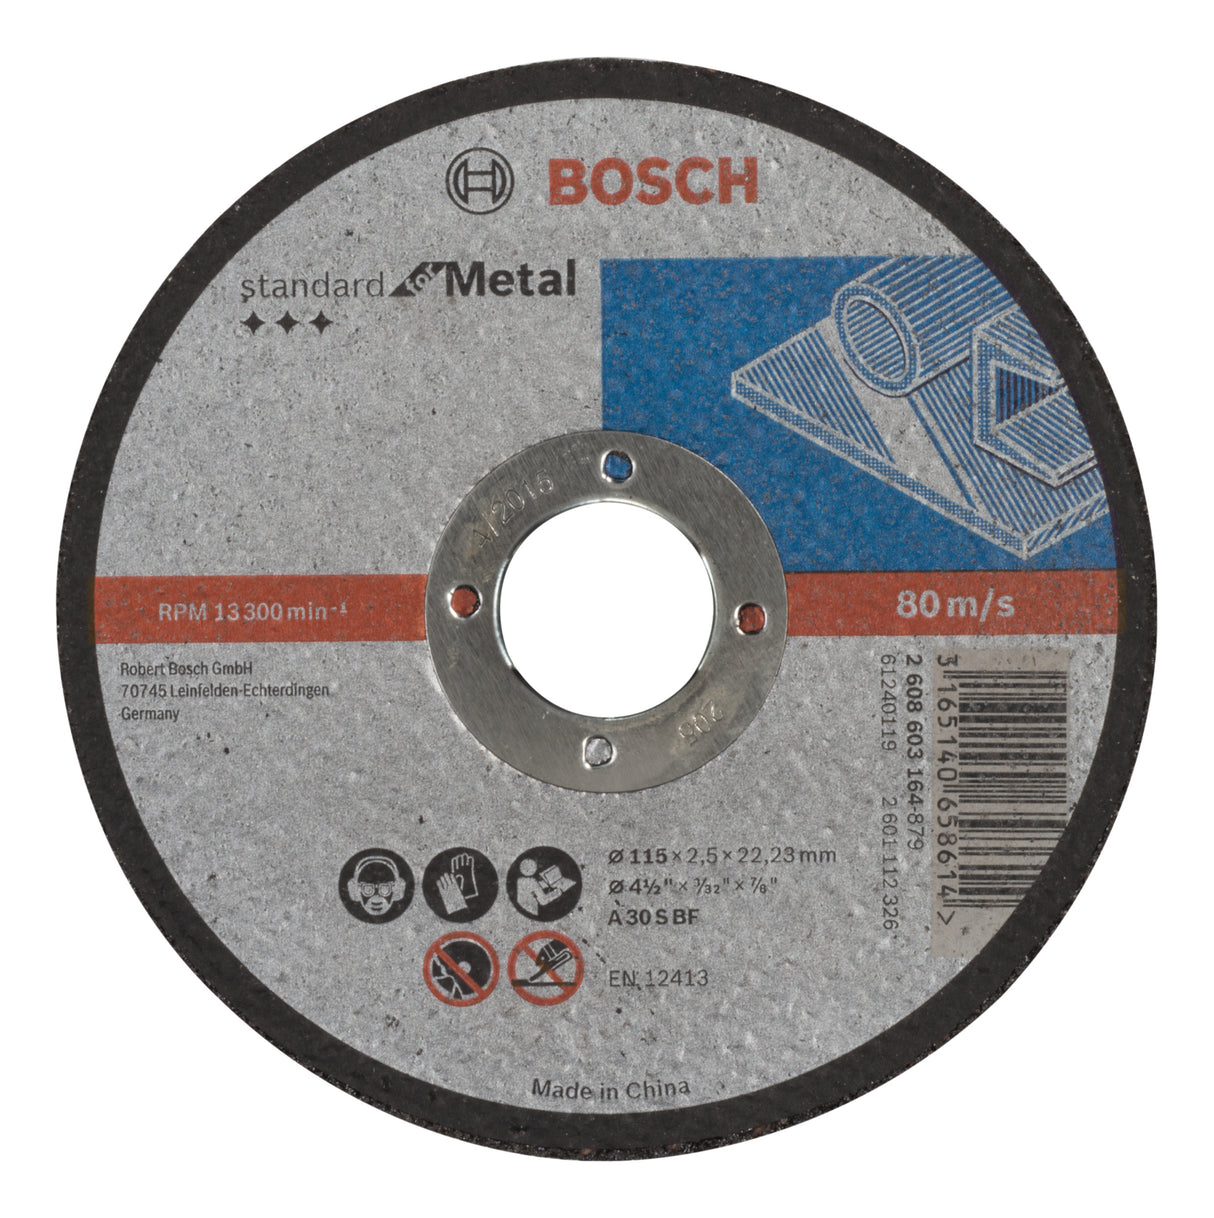 Bosch Professional Metal Straight Cutting Disc A 30 S BF - 115mm x 22.23mm x 2.5mm